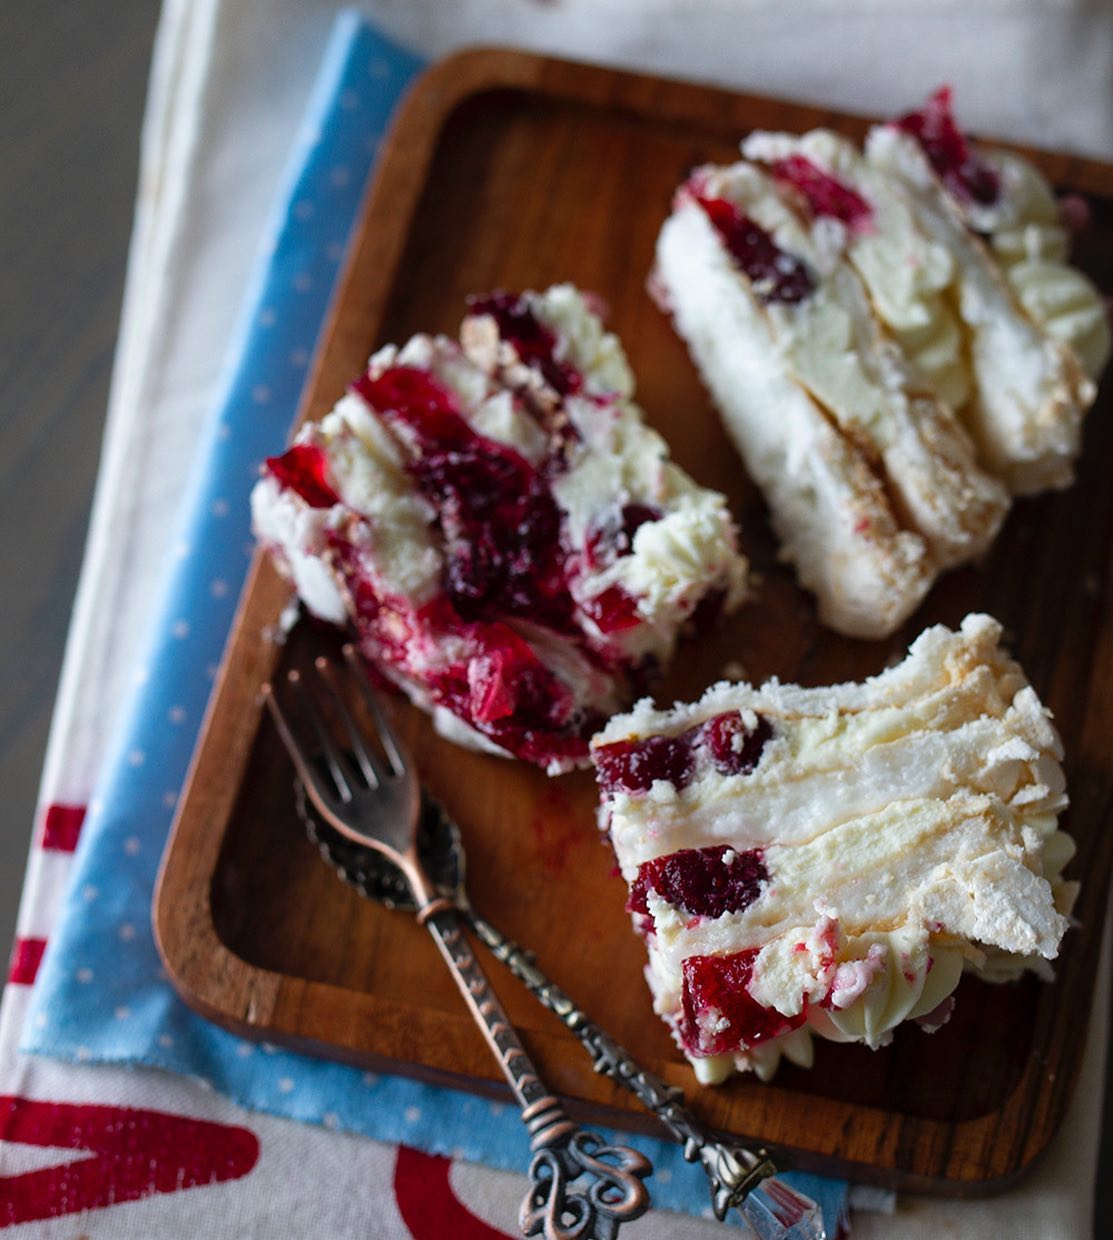 Cranberry meringue cake